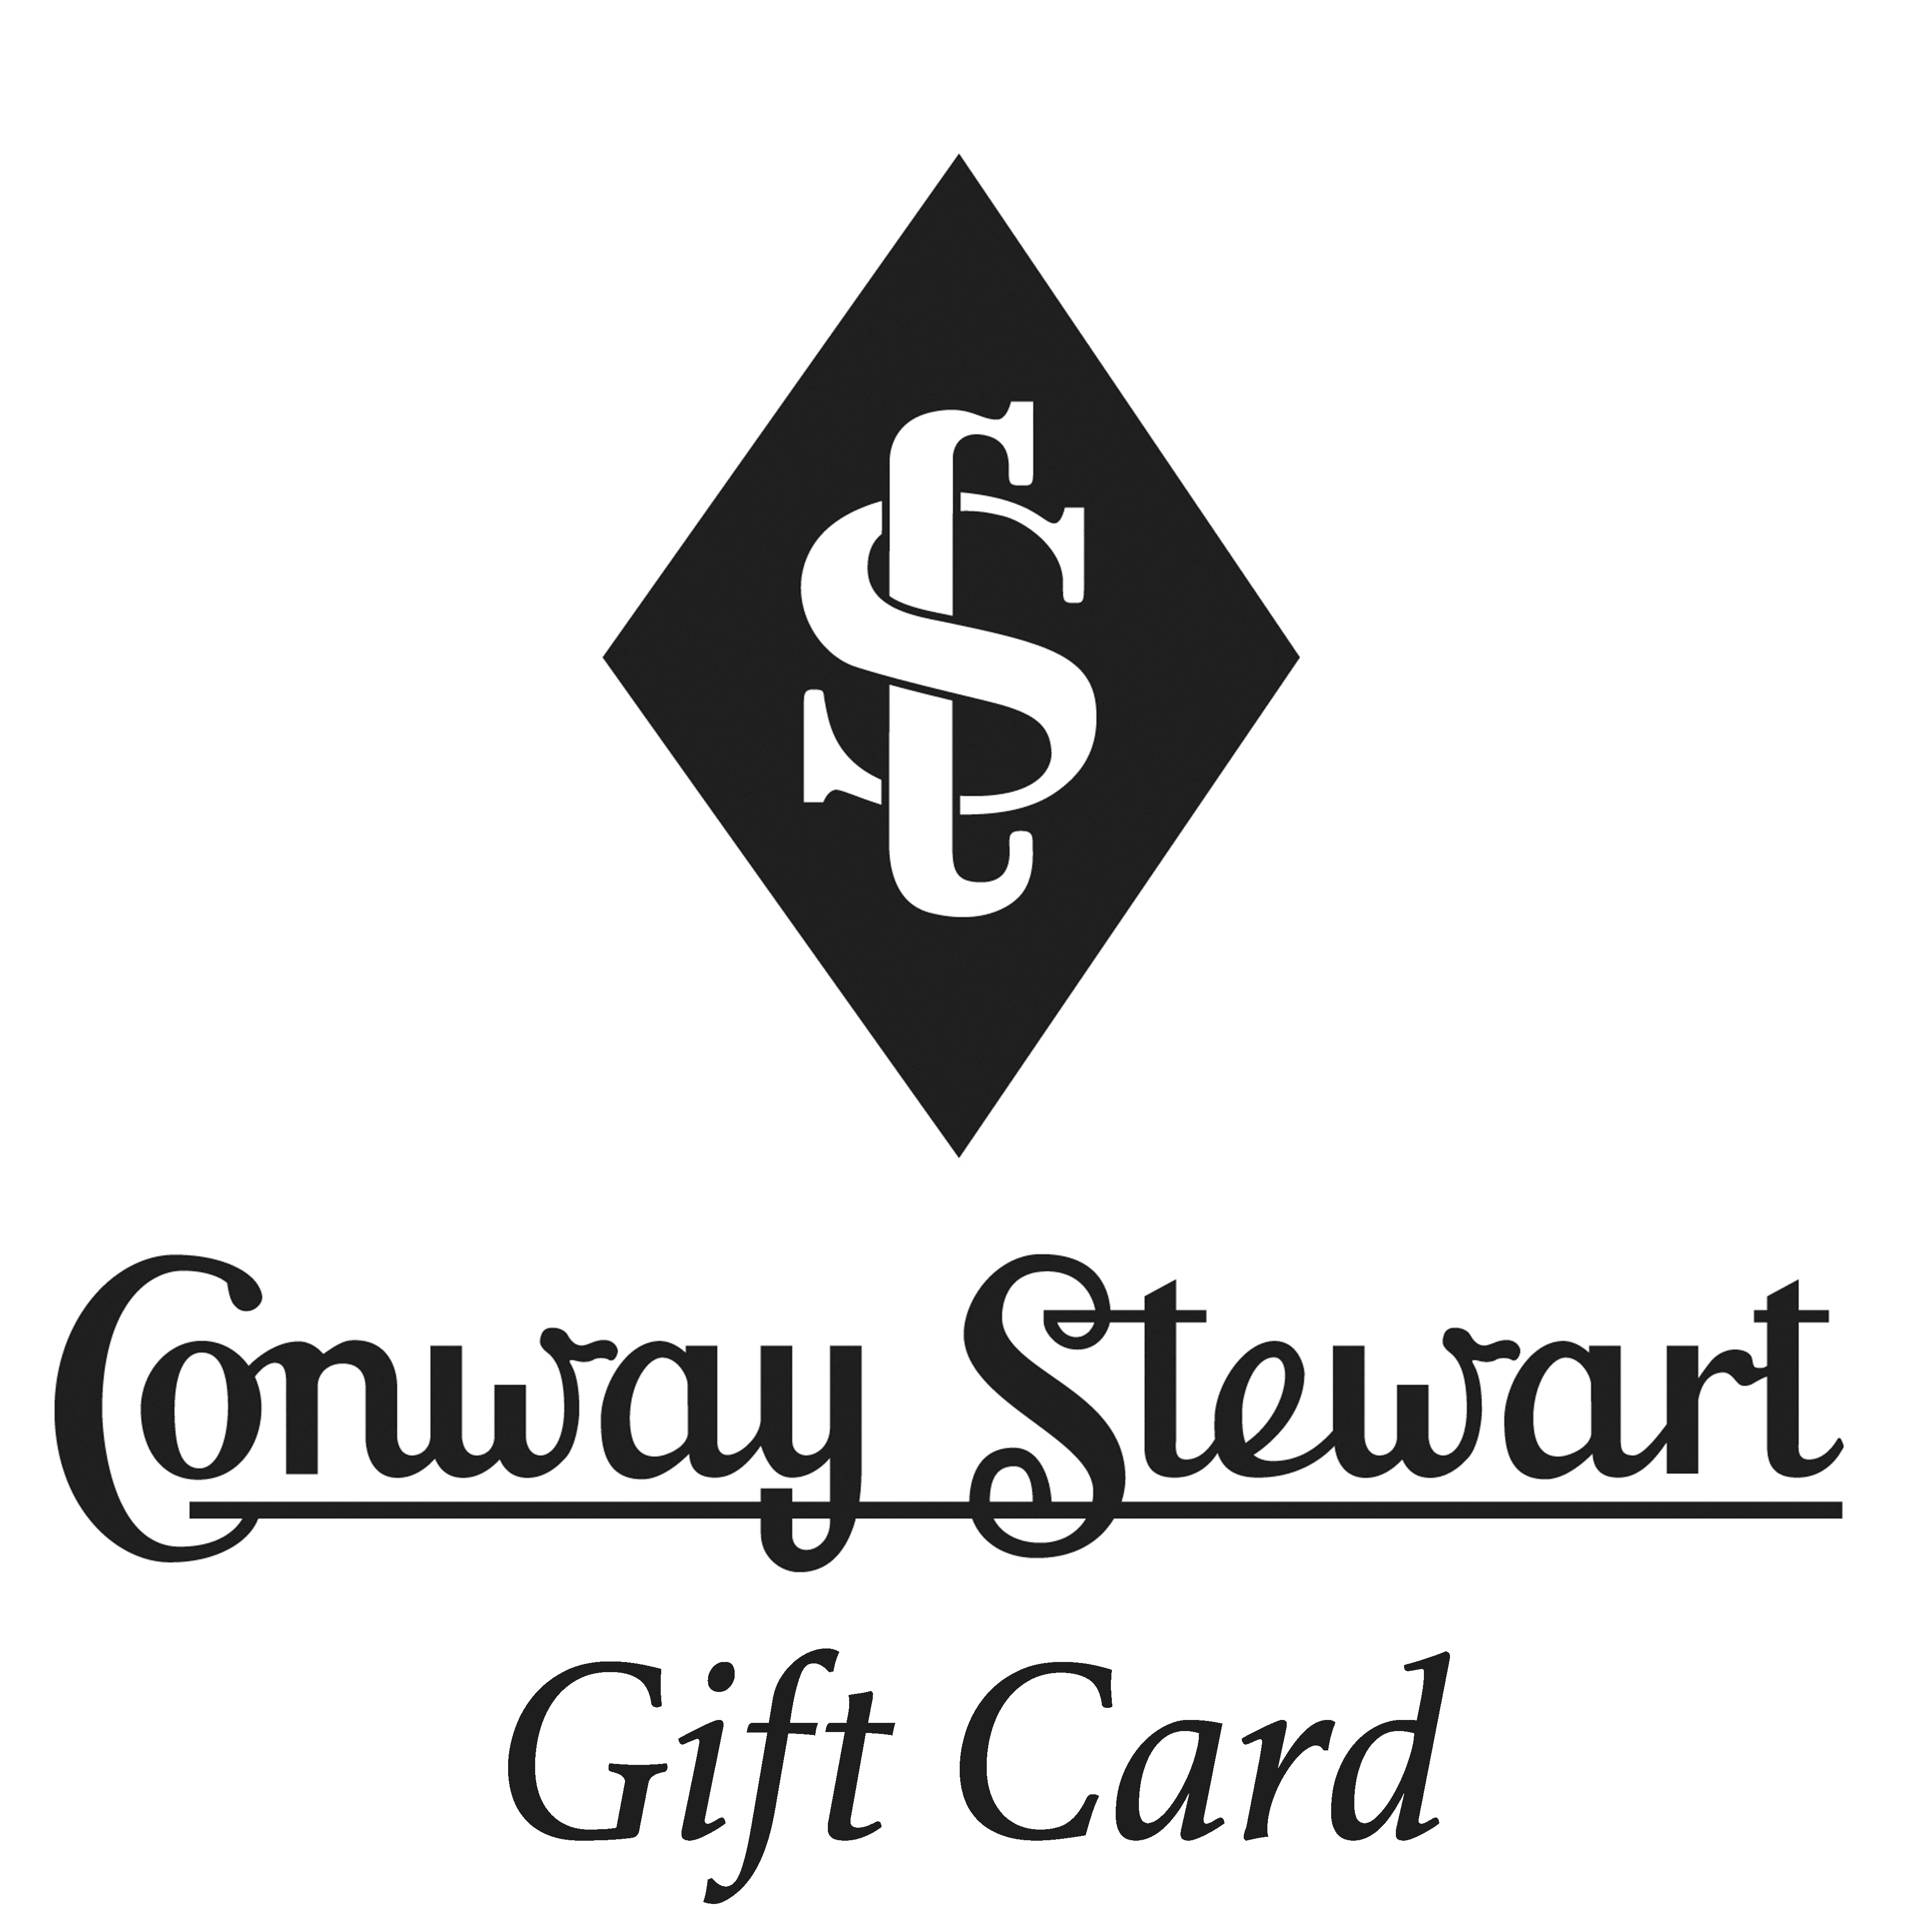 Gift Cards conwaystewart.com